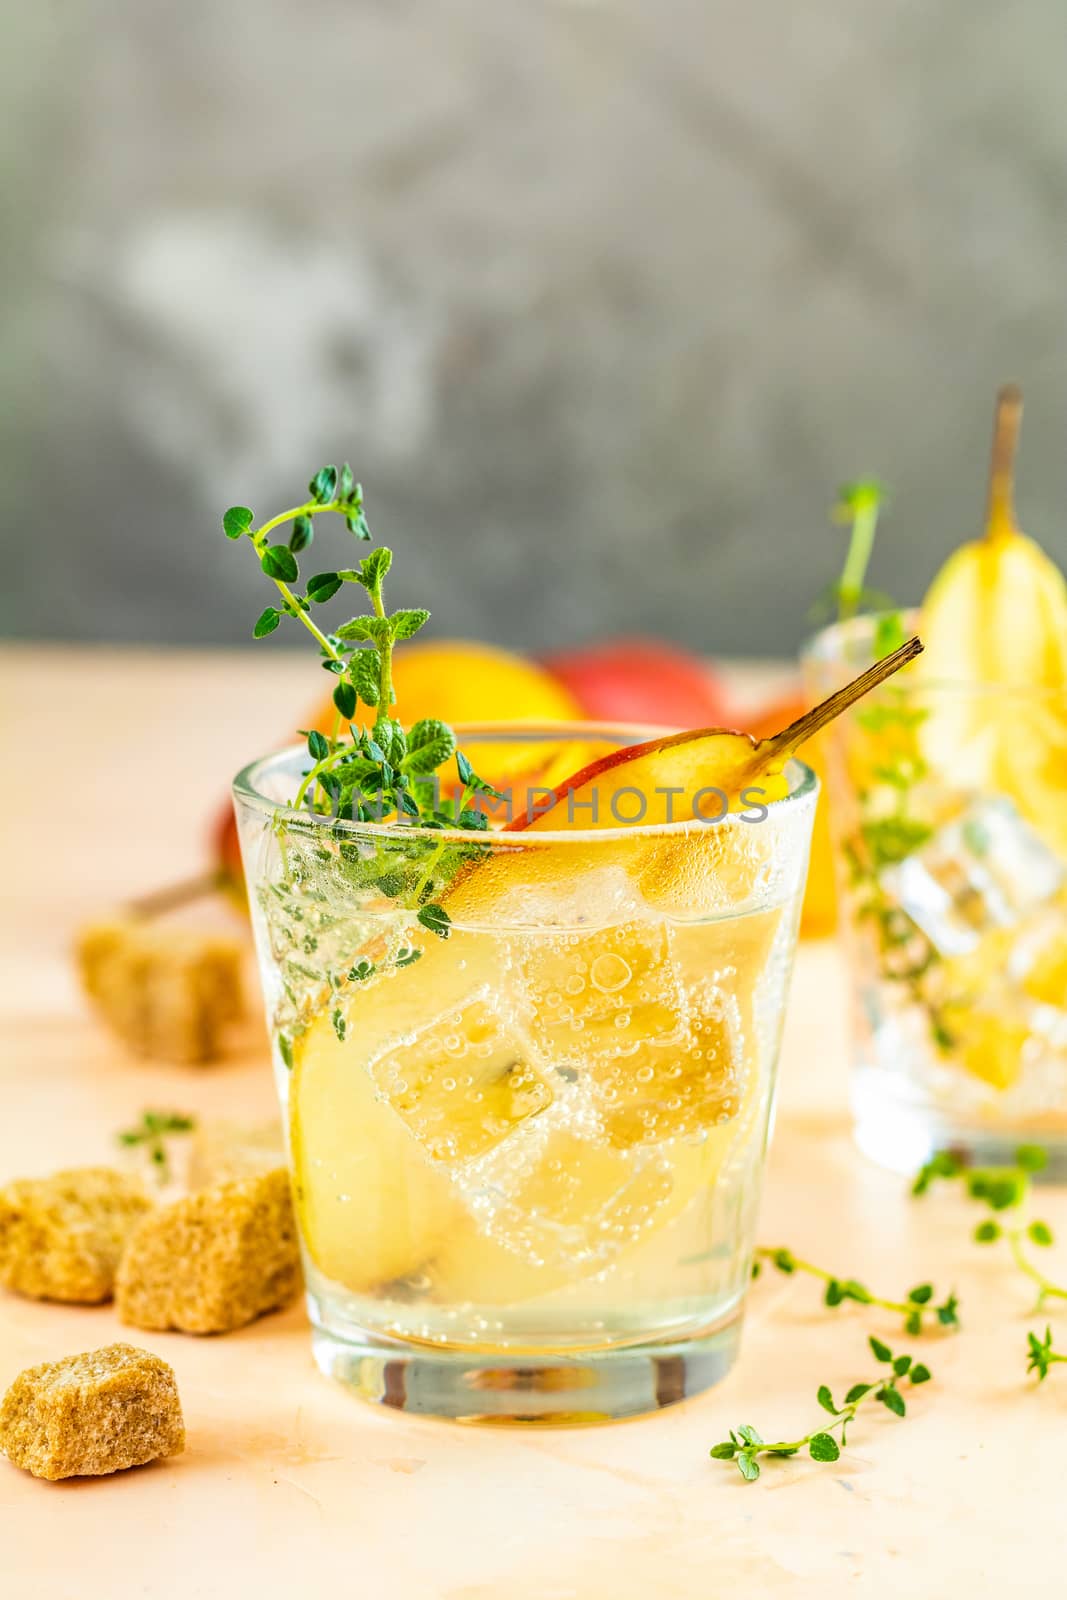 Festive summer drinks, pear thyme cocktail by ArtSvitlyna